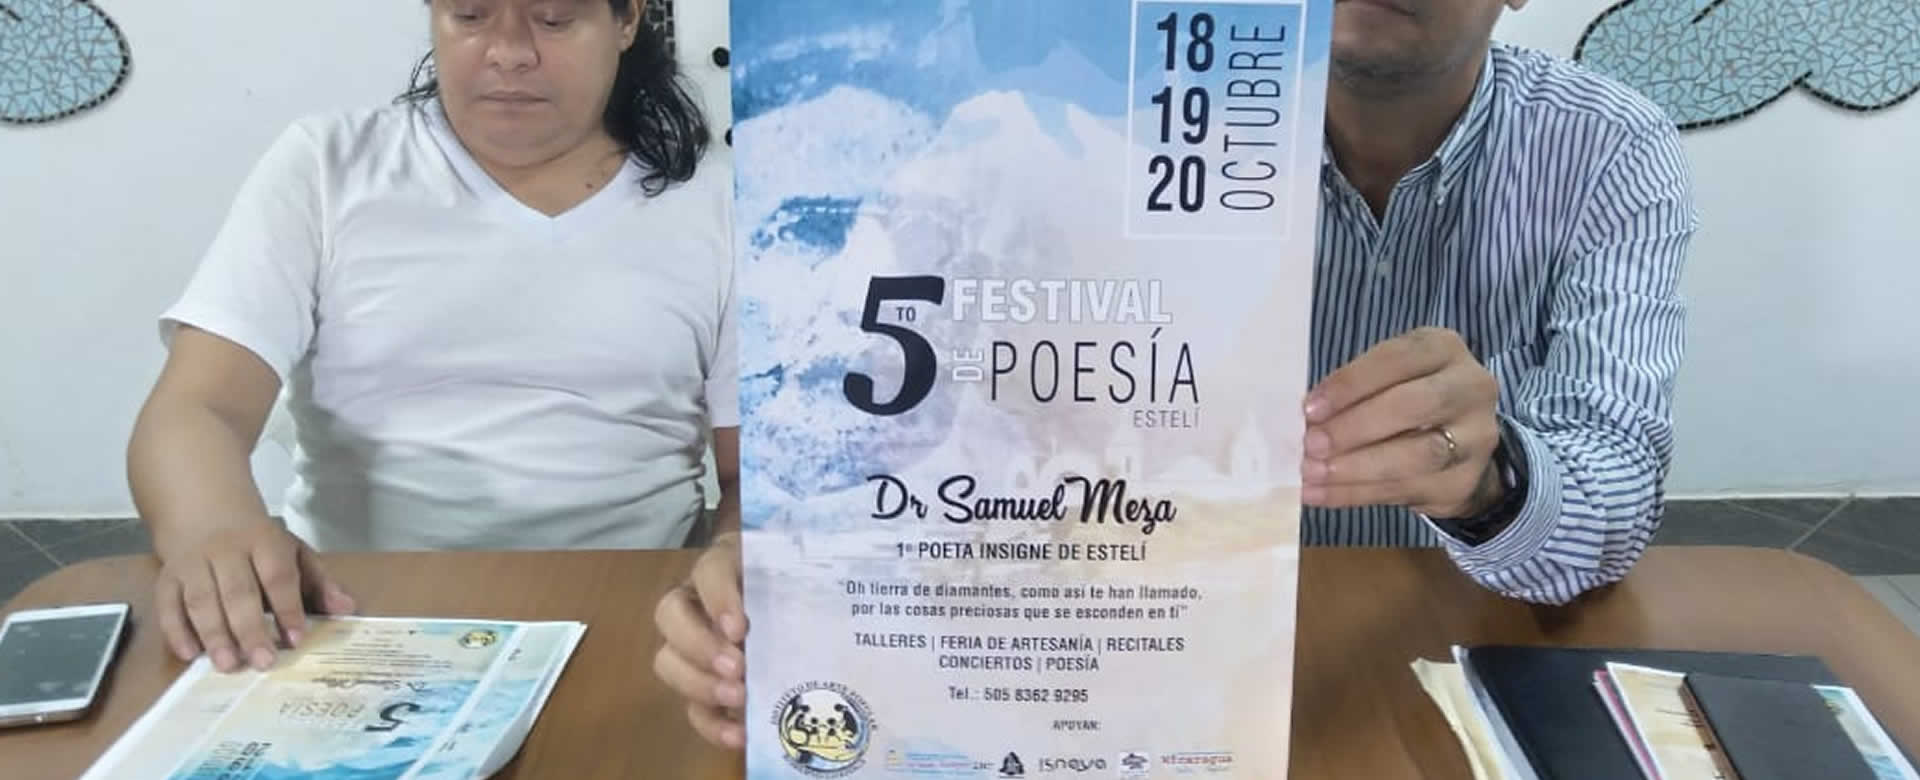 Familias Estelí Festival Poesía